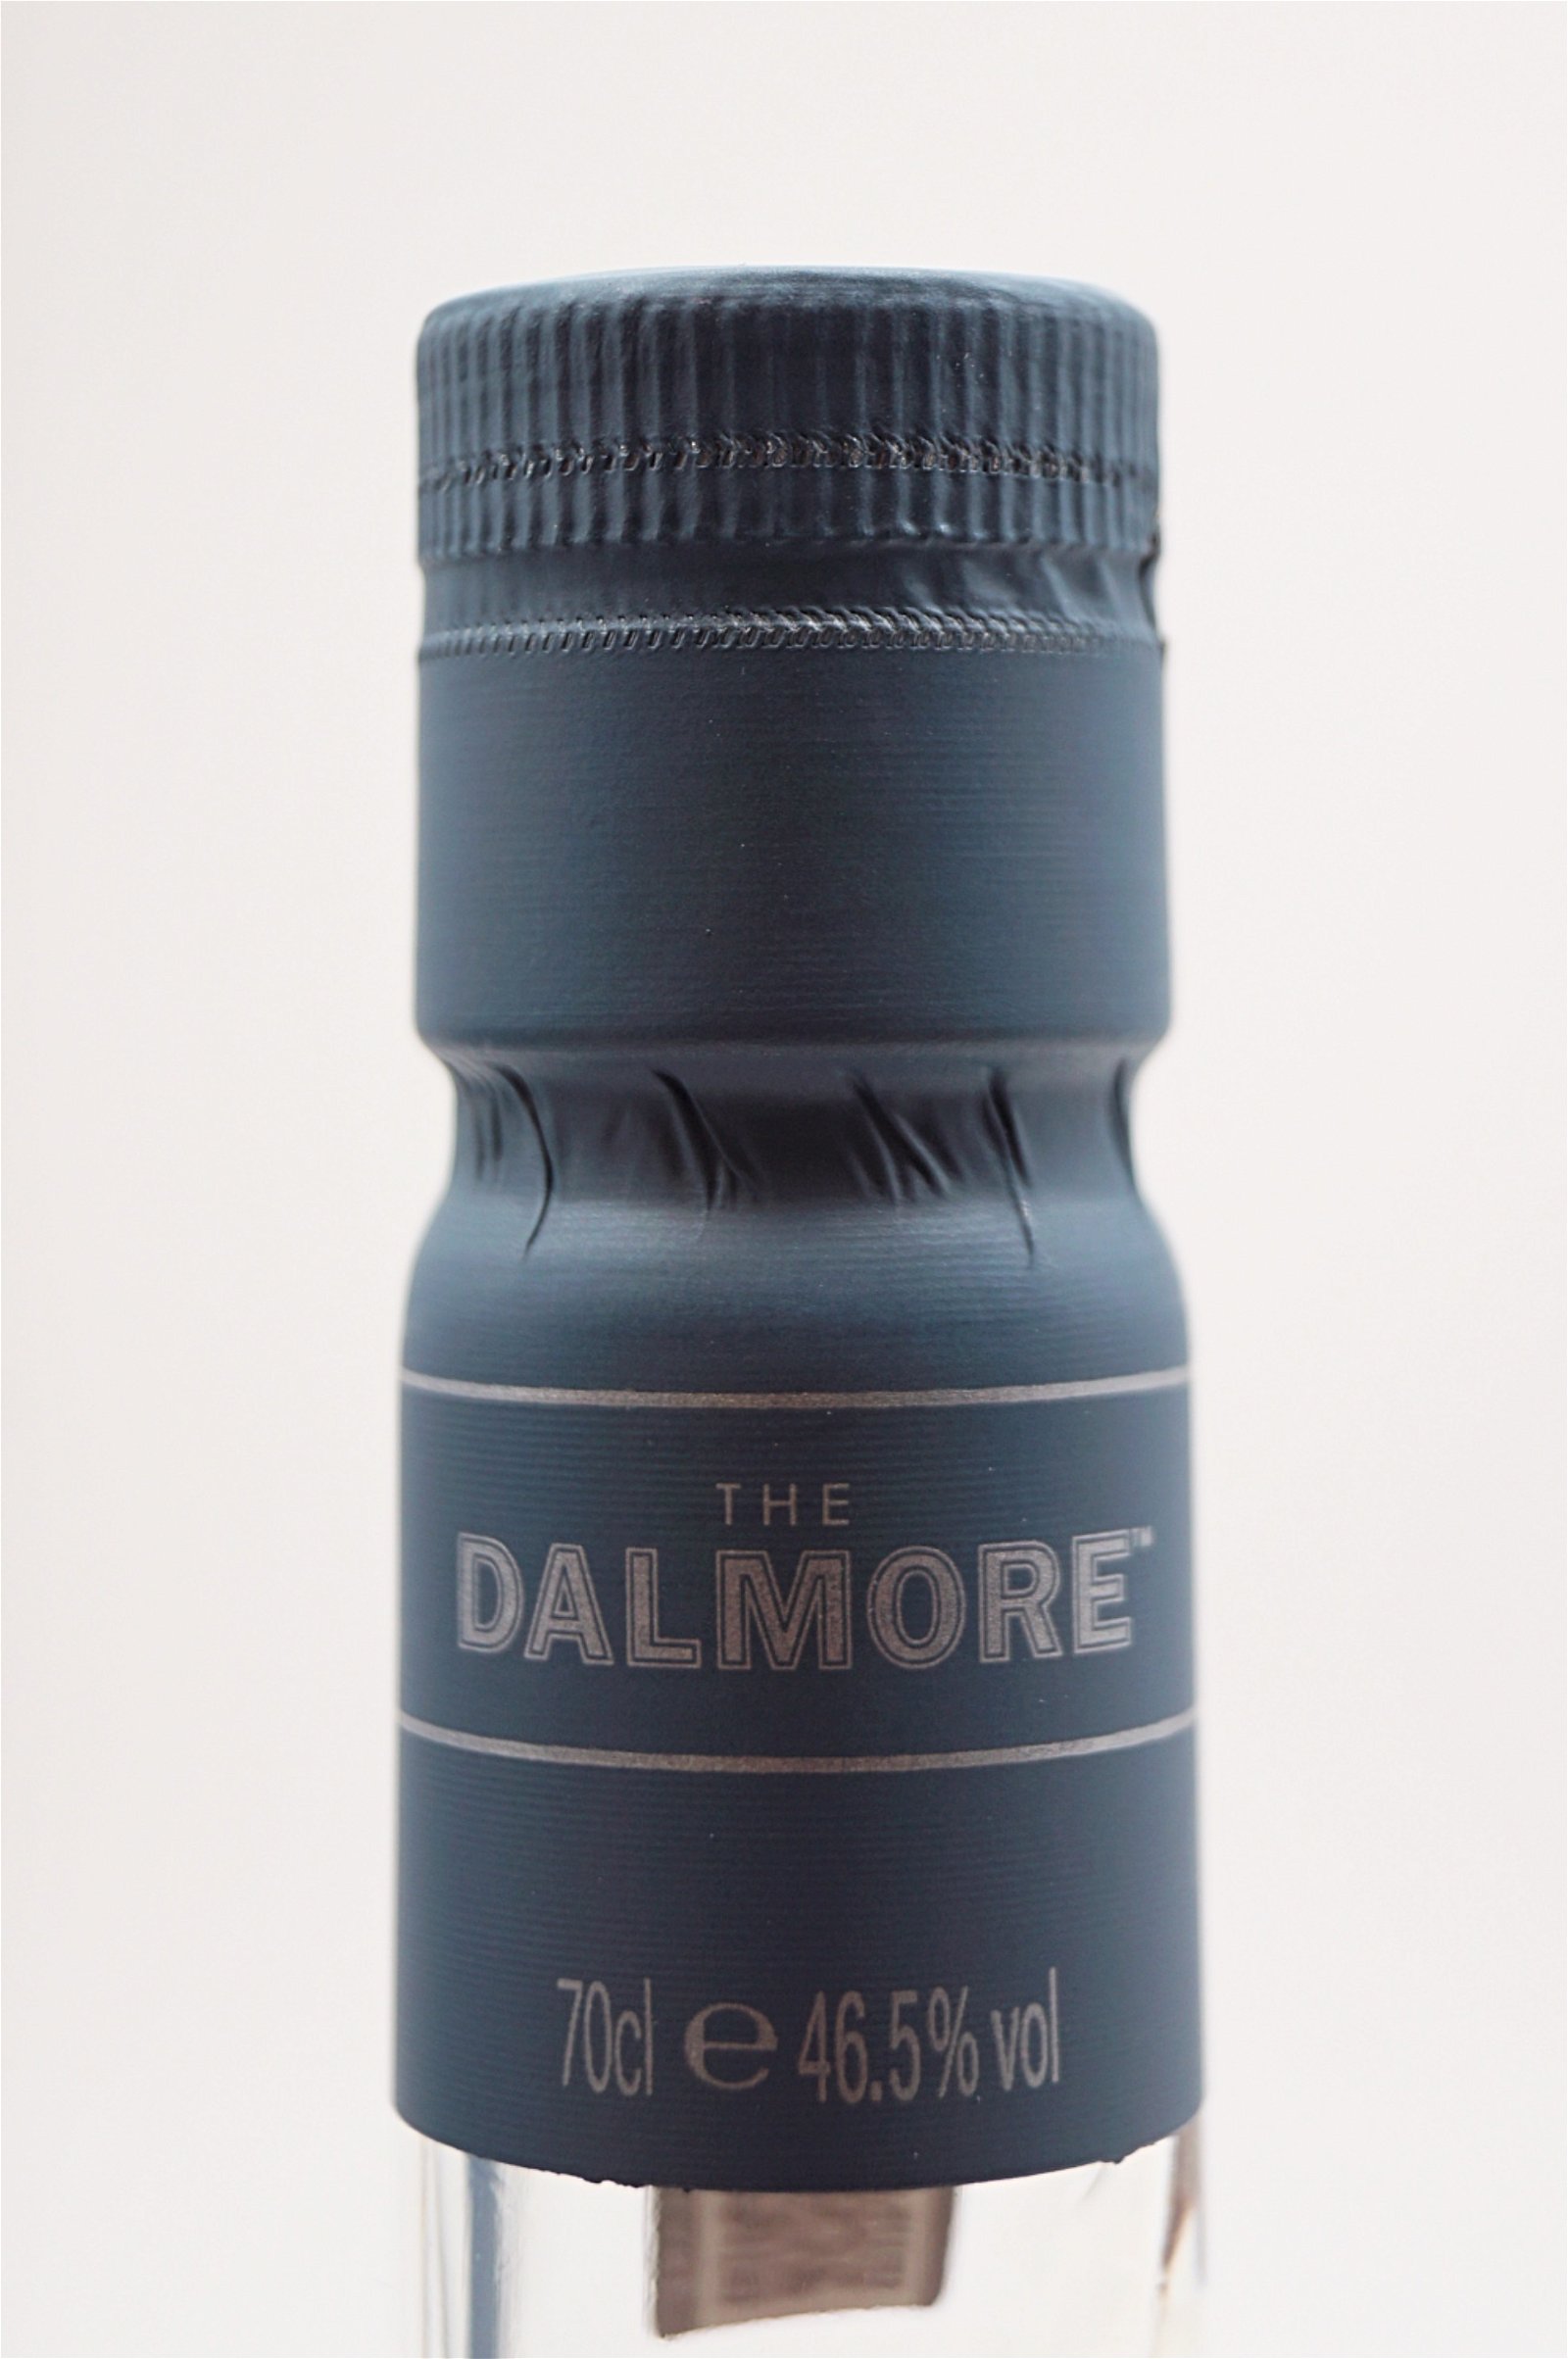 The Dalmore 2007 Vintage Highland Single Malt Scotch Whisky